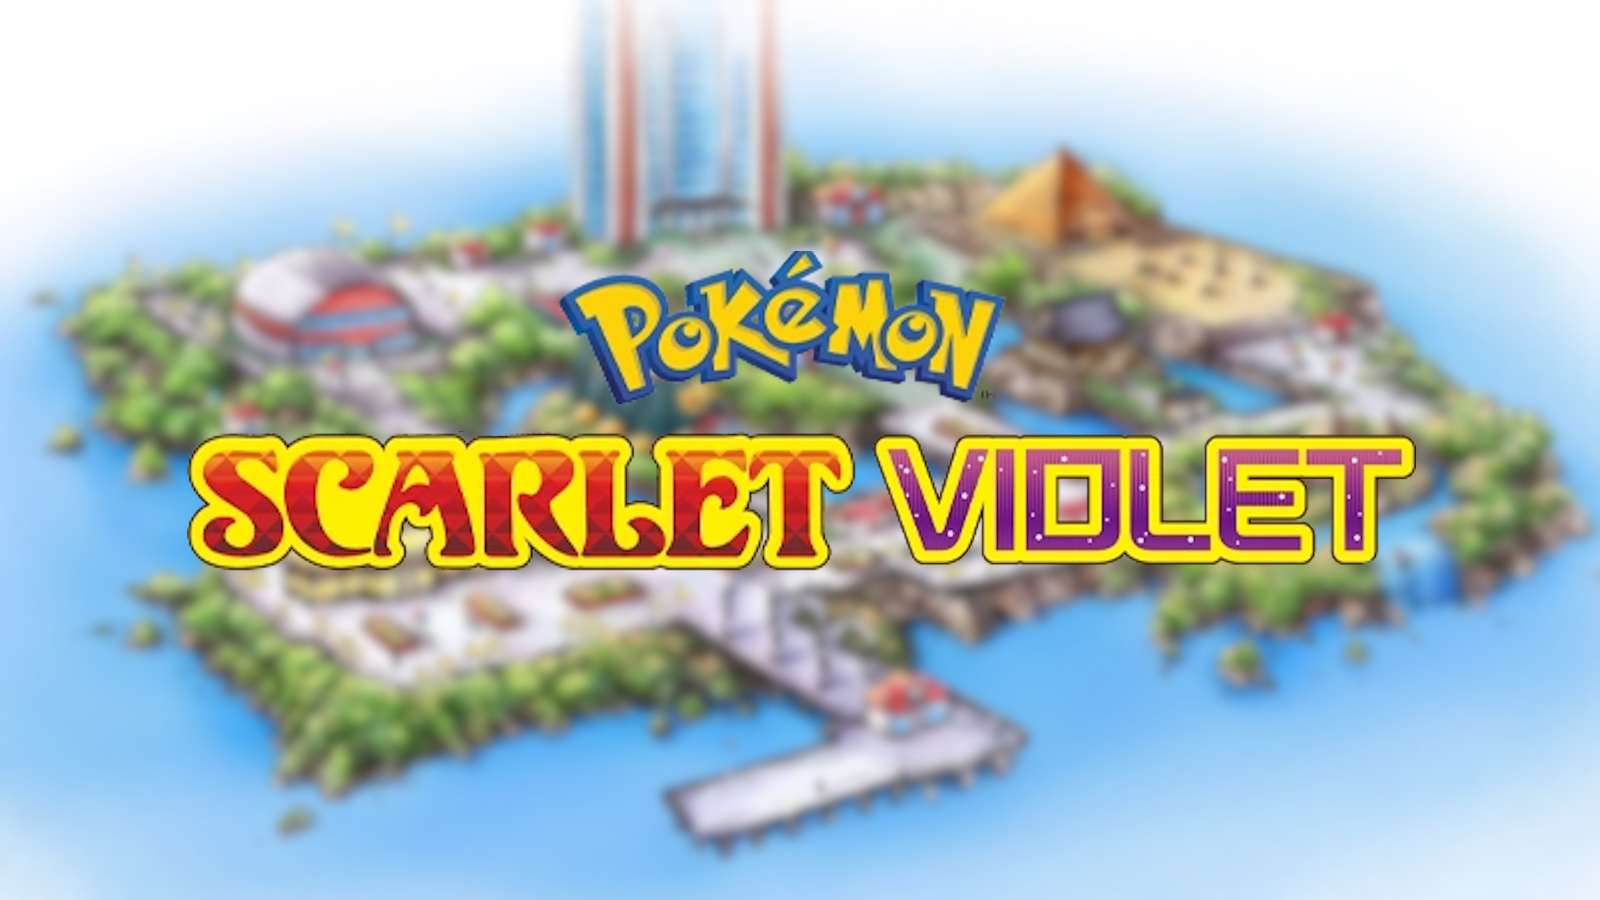 Pokemon Scarlet & Violet logo in front of blurred imagine of Hoenn's Battle Frontier.